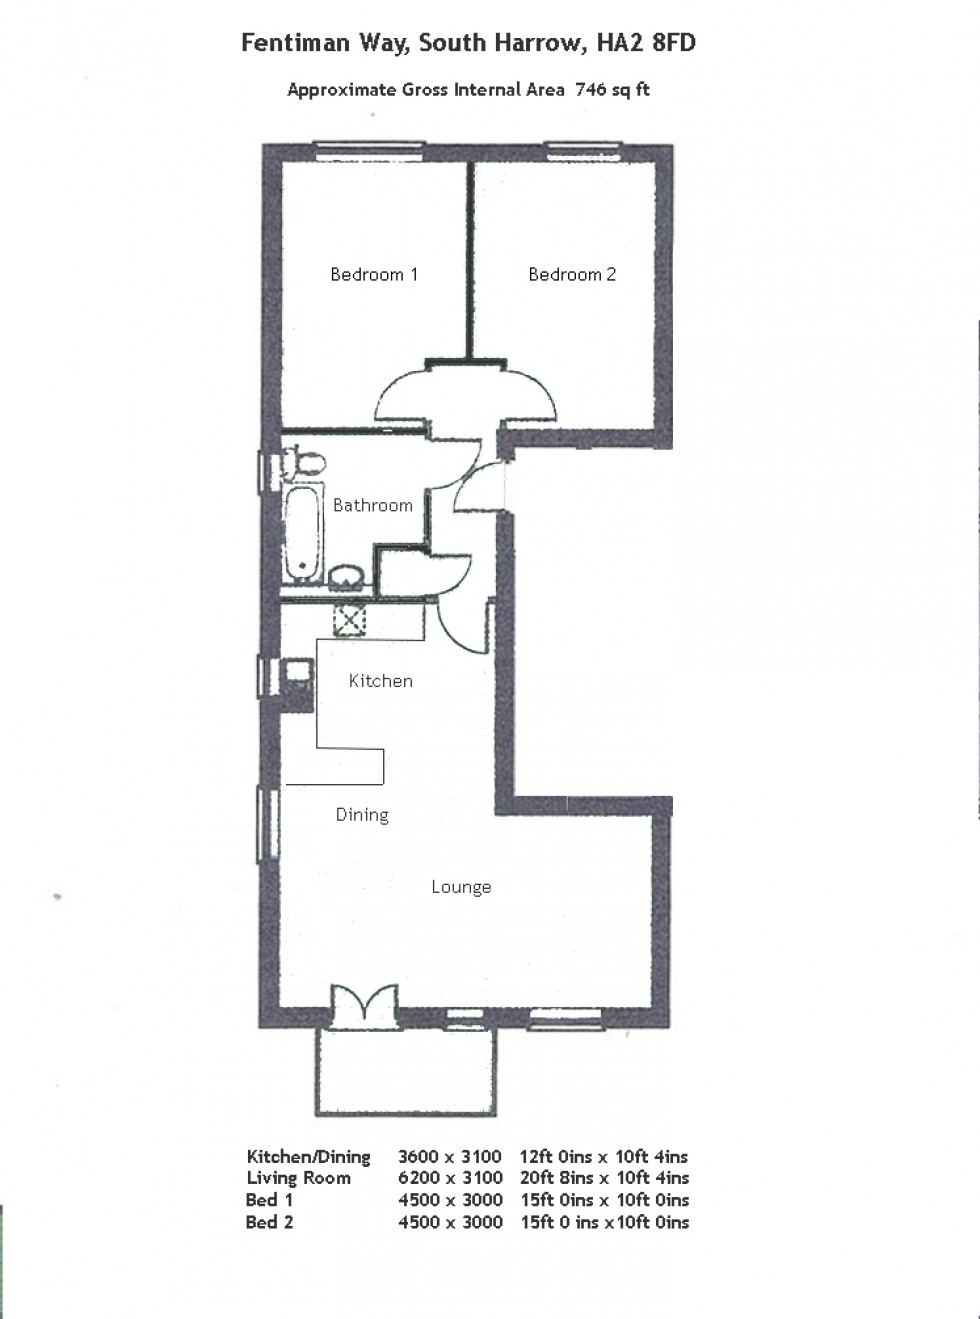 Floorplan for Fentiman Way, South Harrow, HA2 8FD